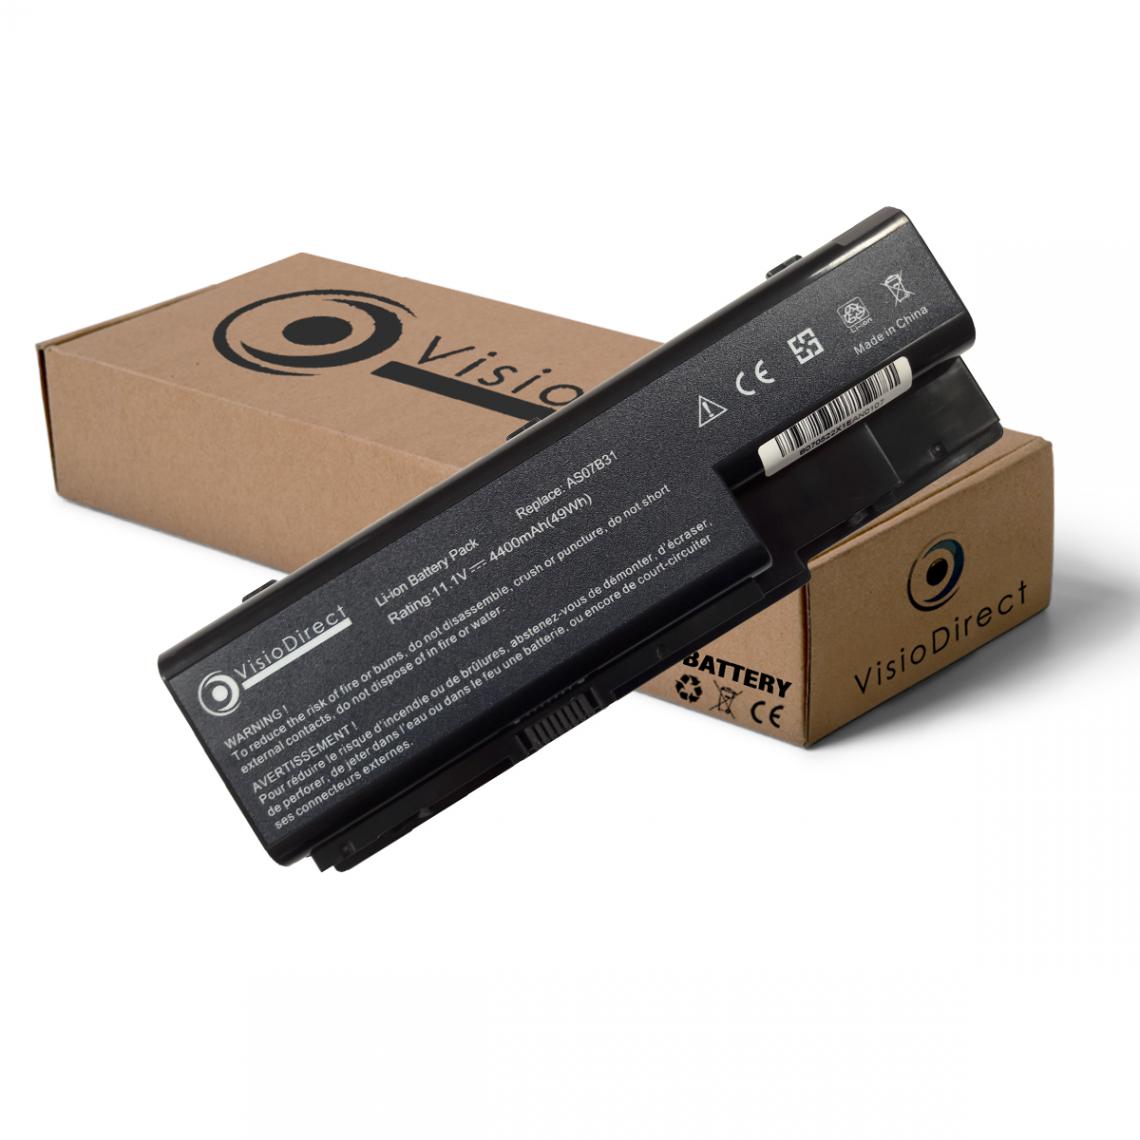 Visiodirect - Batterie compatible avec EMACHINEs E510 E-510 E520 E-520 G420 G-420 G520 G-520 G720 4400mAh 11.1V - Batterie PC Portable